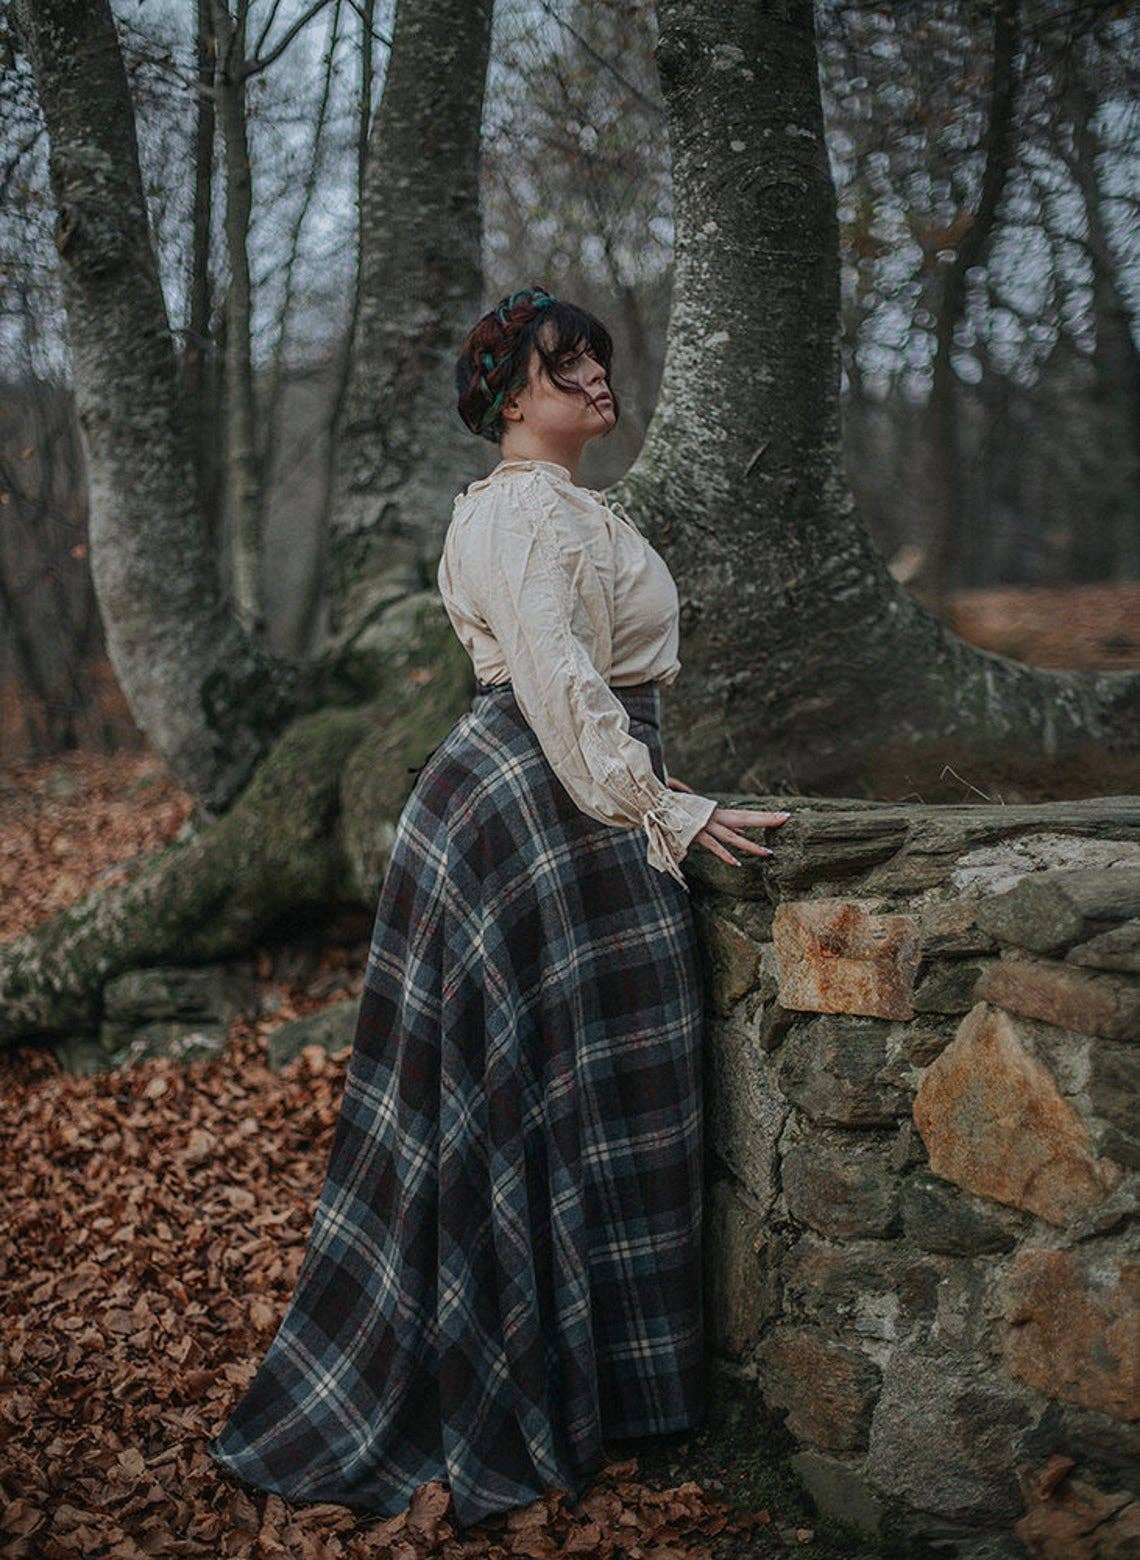 Tartan Oulander Historical Scottish Skirt in Brown and Grey